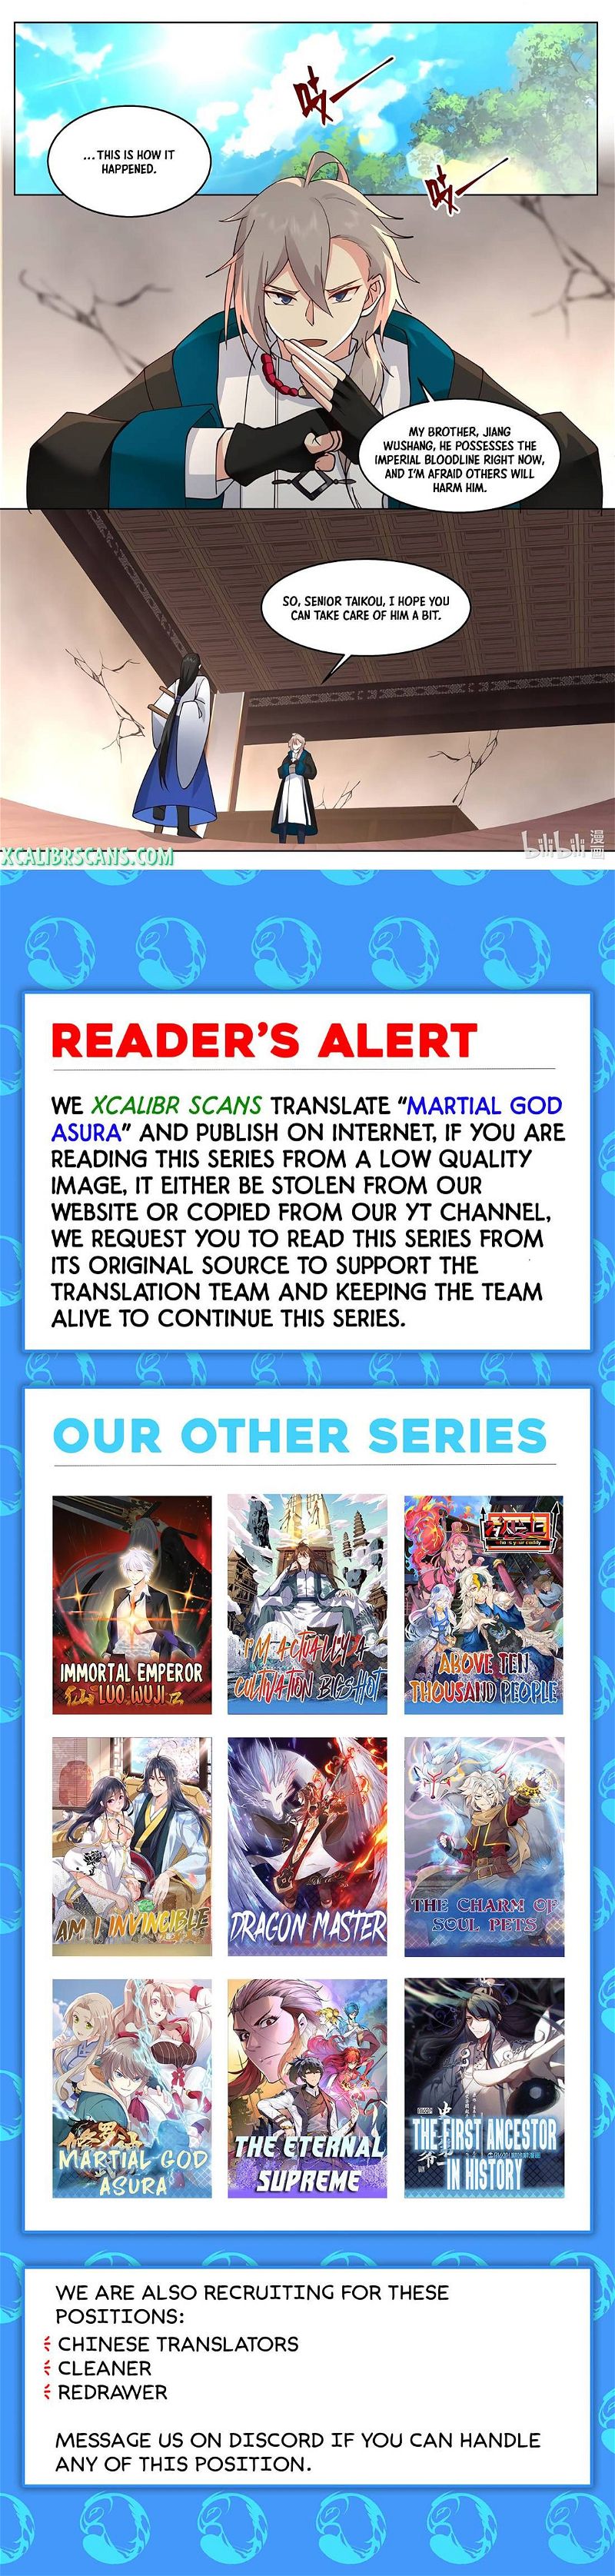 Martial God Asura Chapter 507 page 10